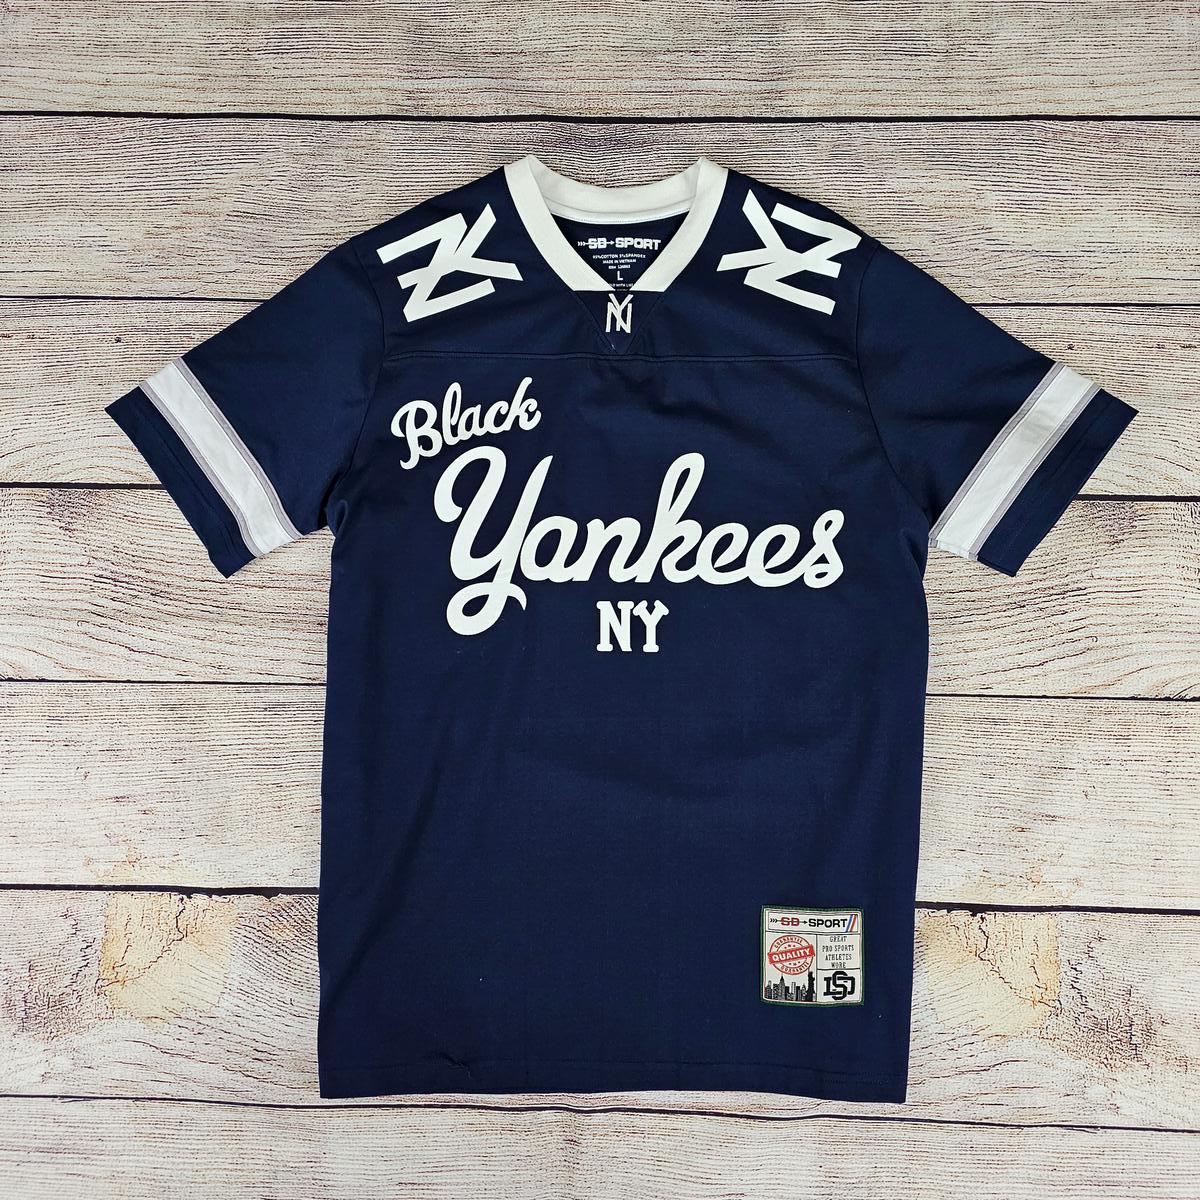 New York Yankees Gear, Yankees Merchandise, Yankees Apparel, Store